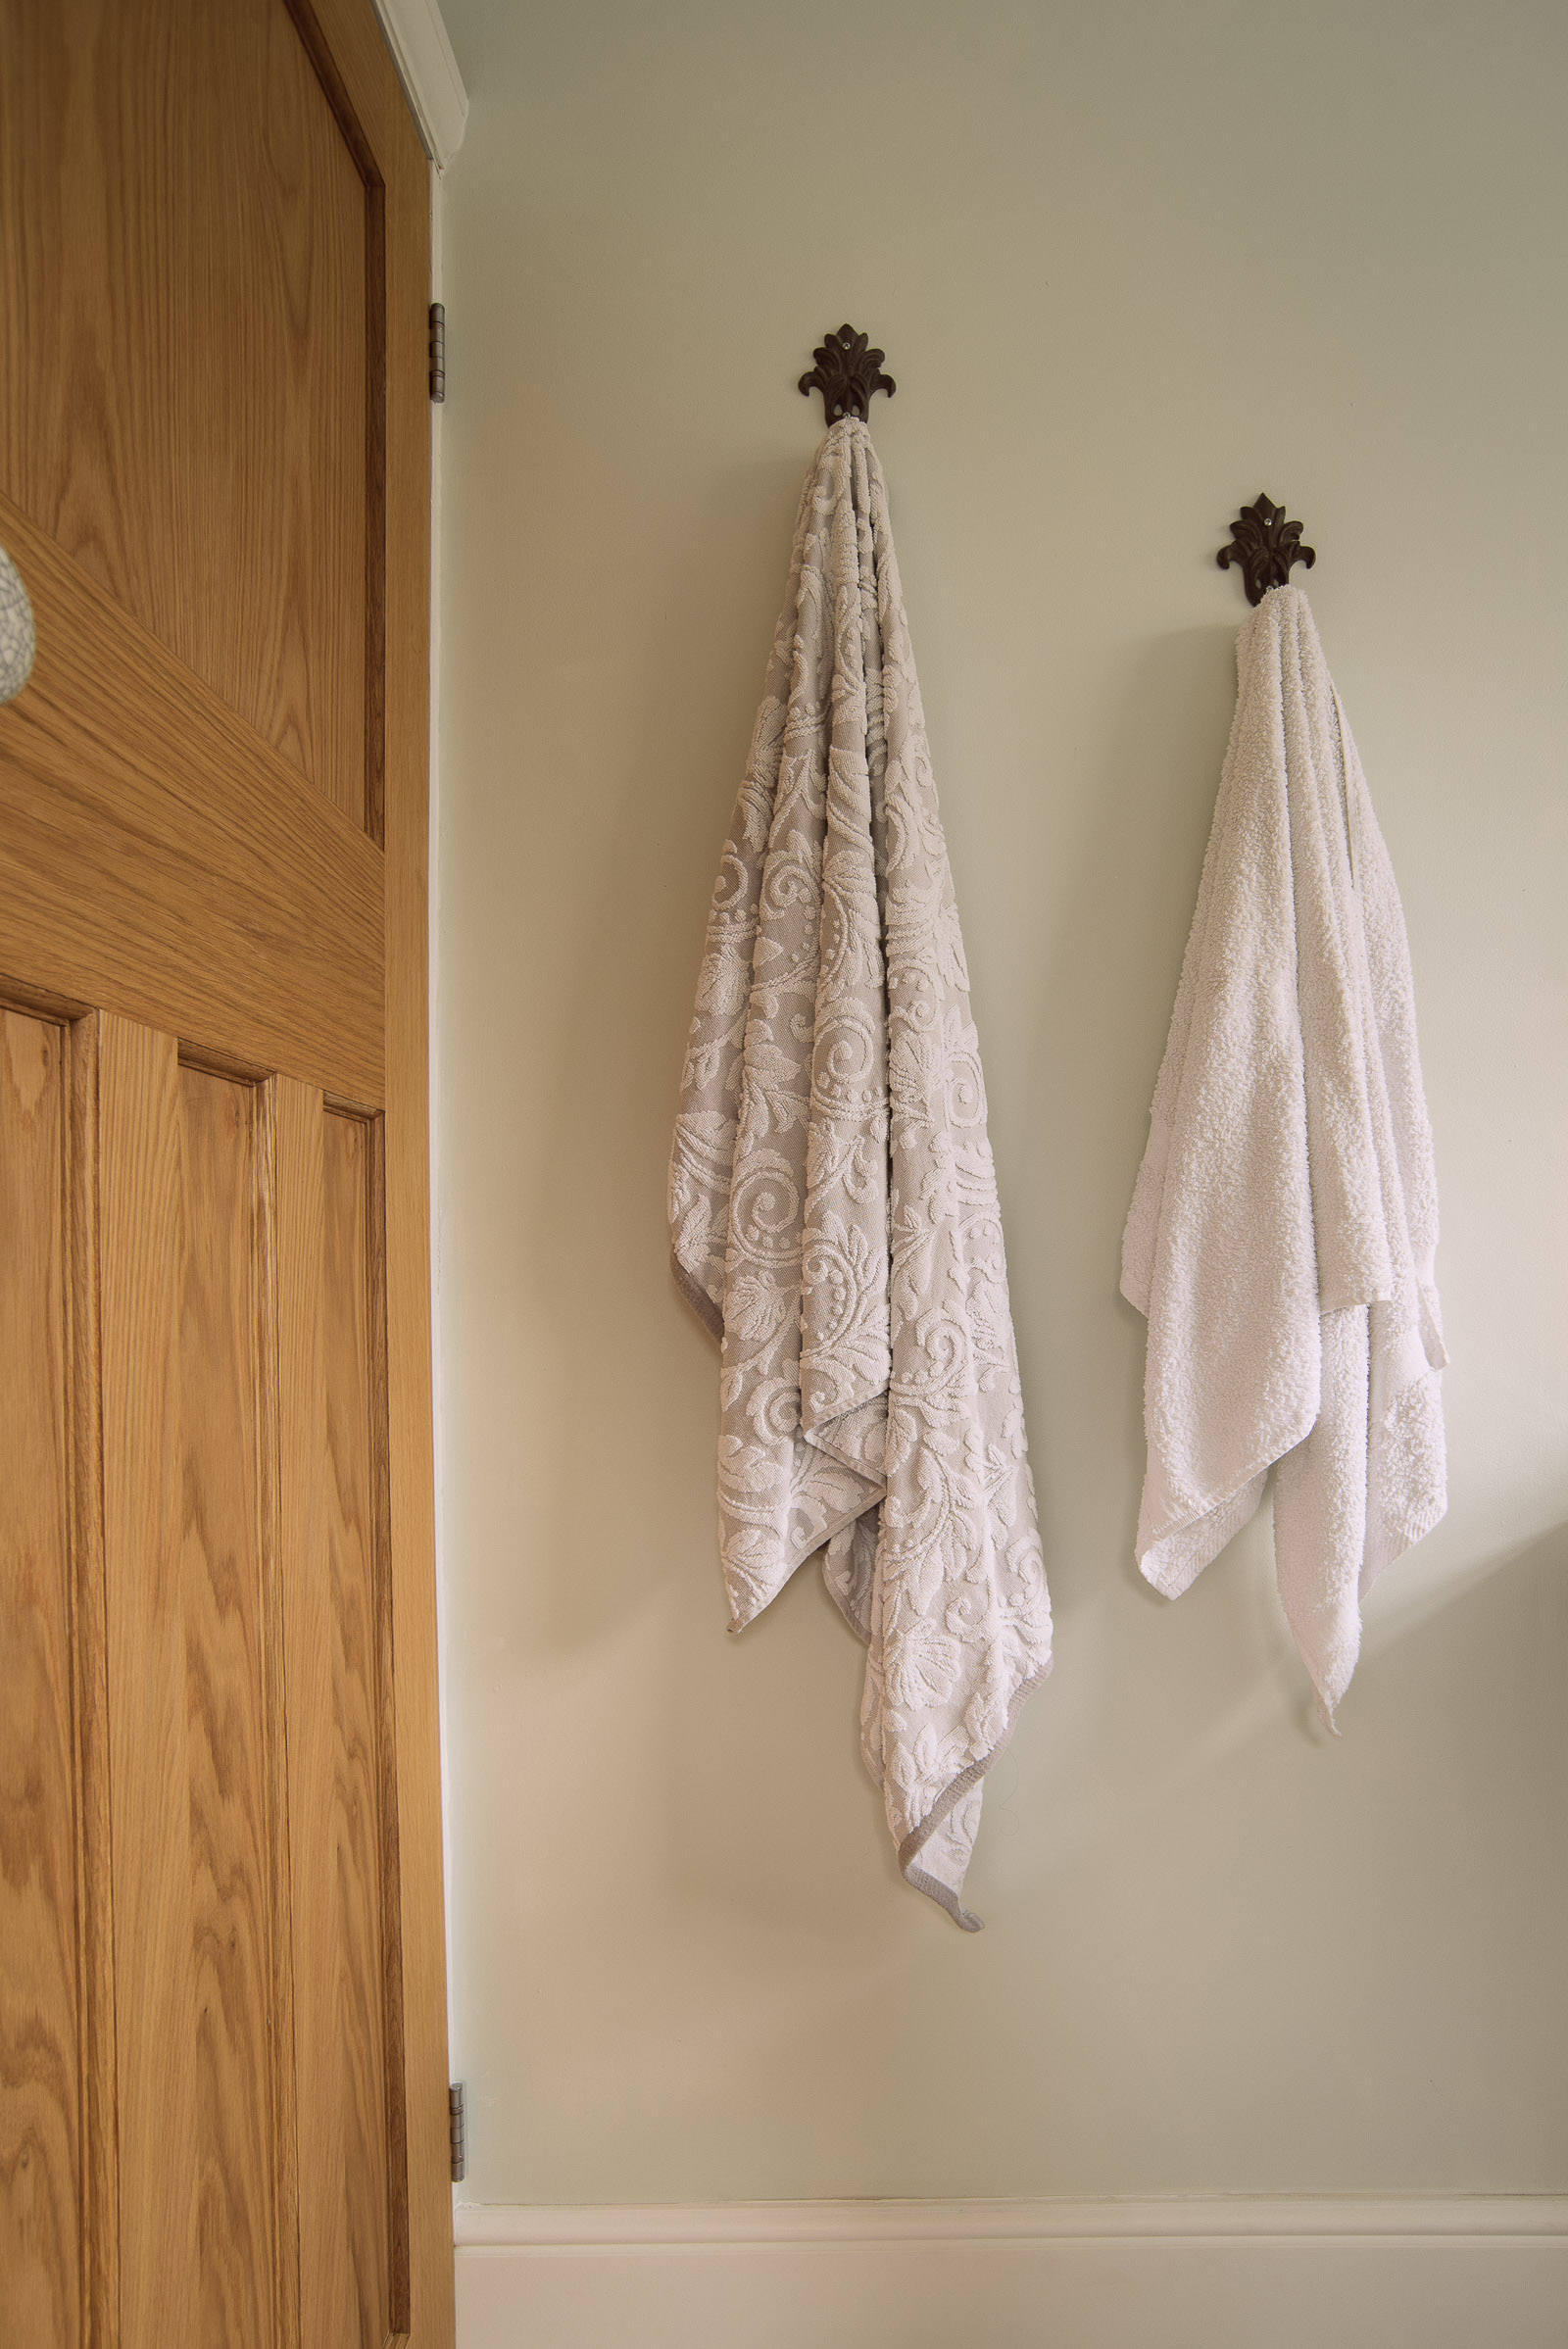 1930s bathroom ideas towel hooks after renovation